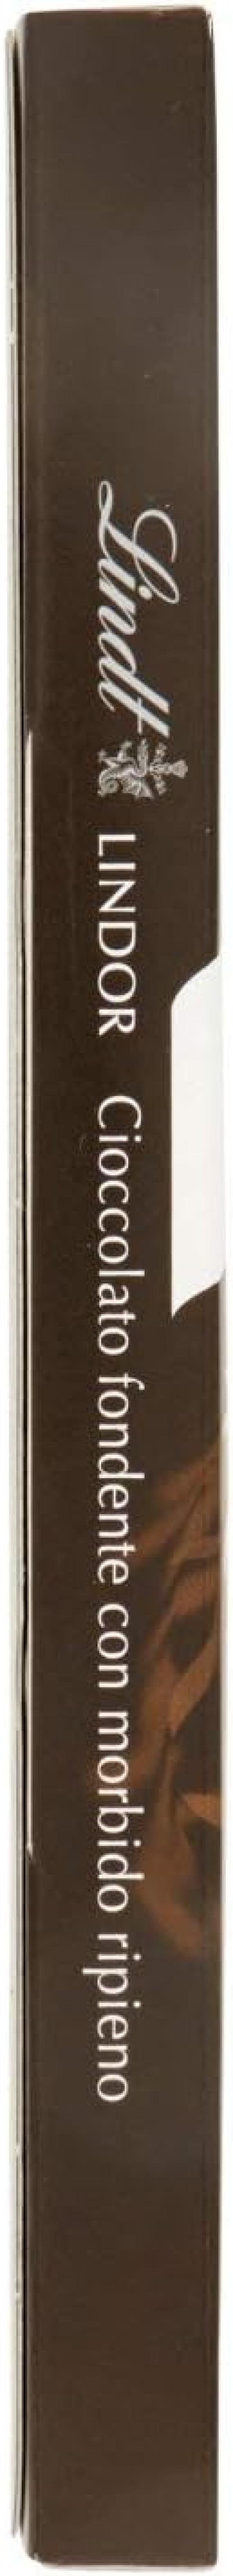 tavoletta-di-cioccolato-fondente-60-lindt-lindor-100gr-3